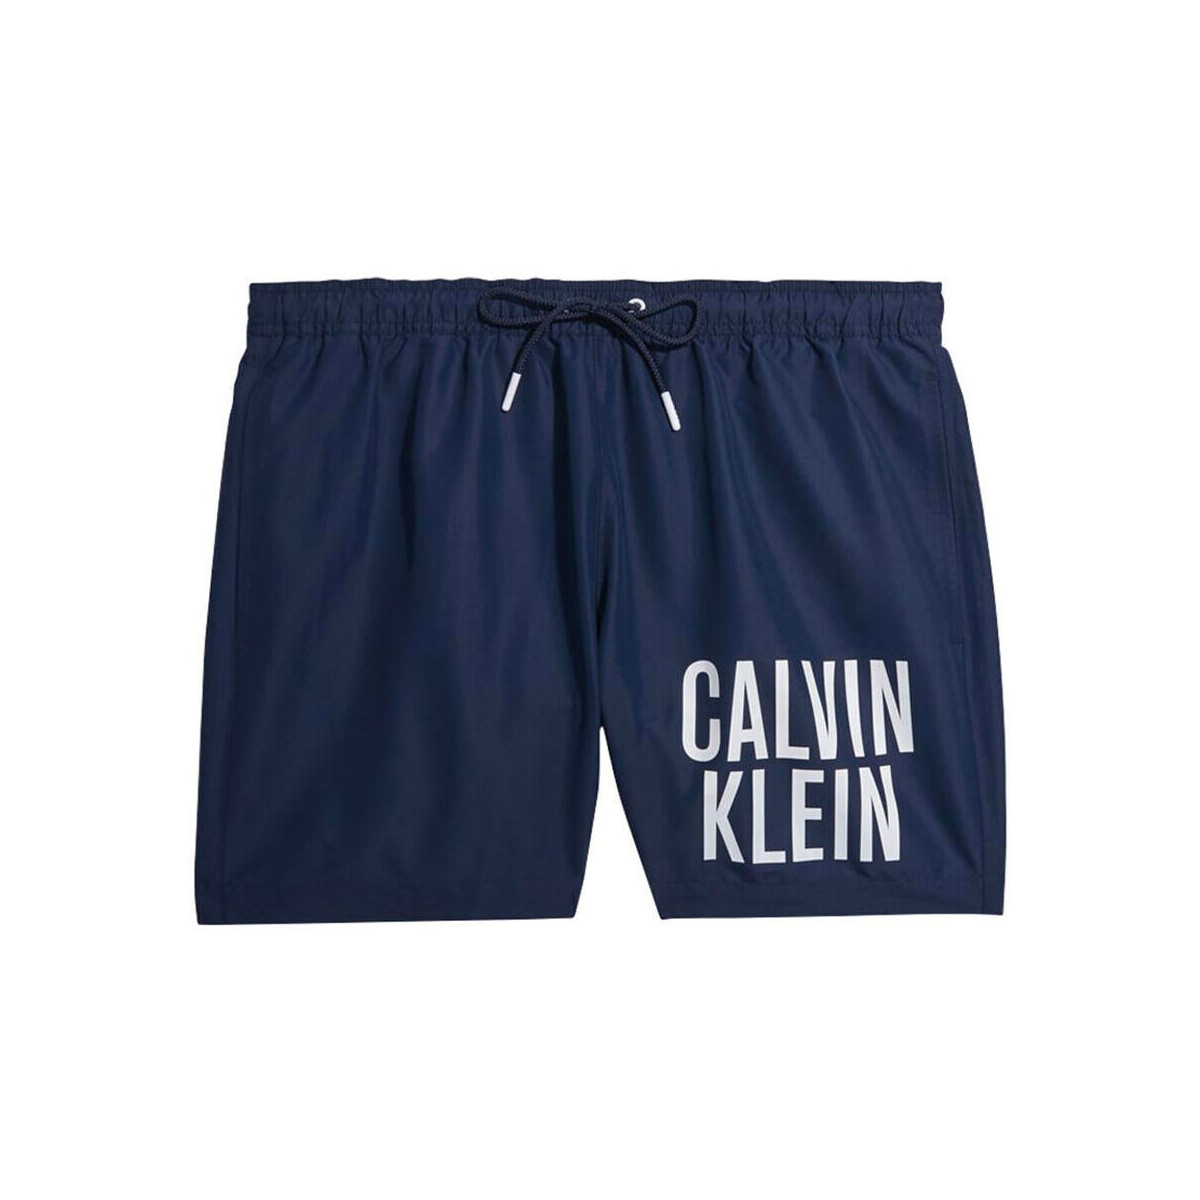 textil Herre Shorts Calvin Klein Jeans km0km00794-dca blue Blå